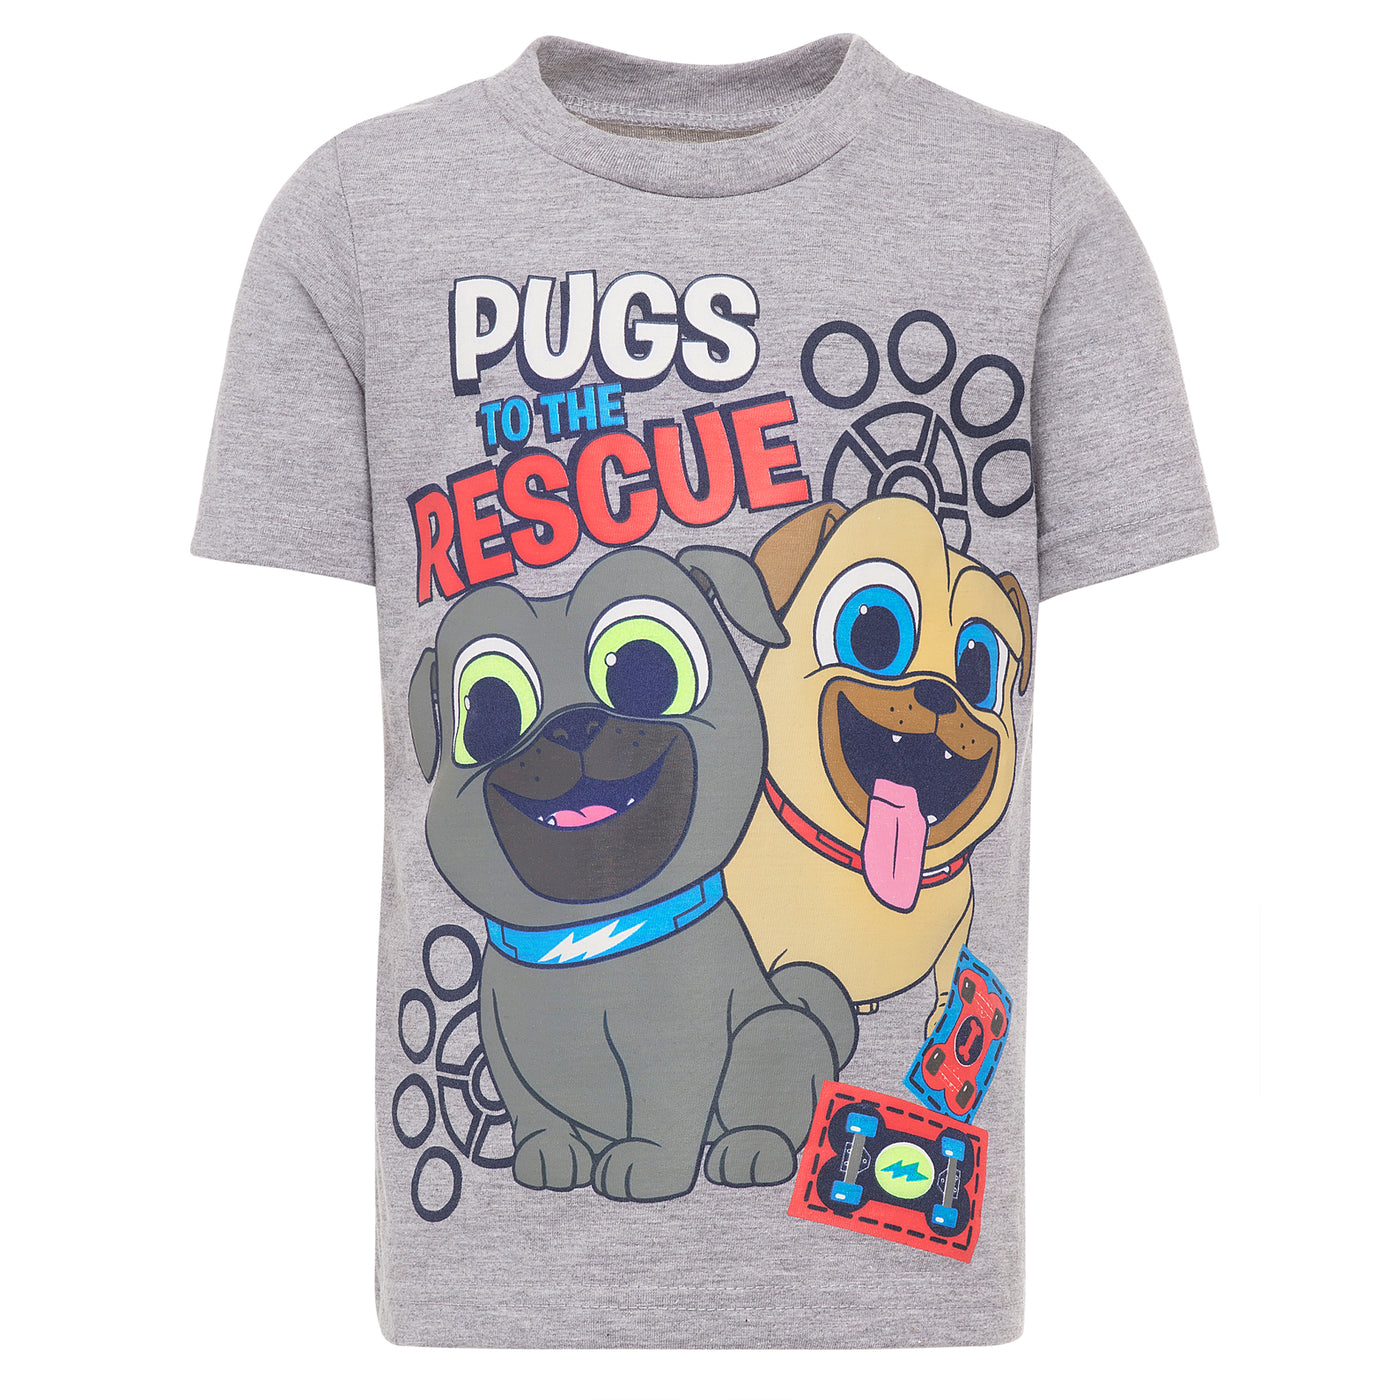 Puppy Dog Pals Athletic T-Shirt Mesh Shorts Outfit Set